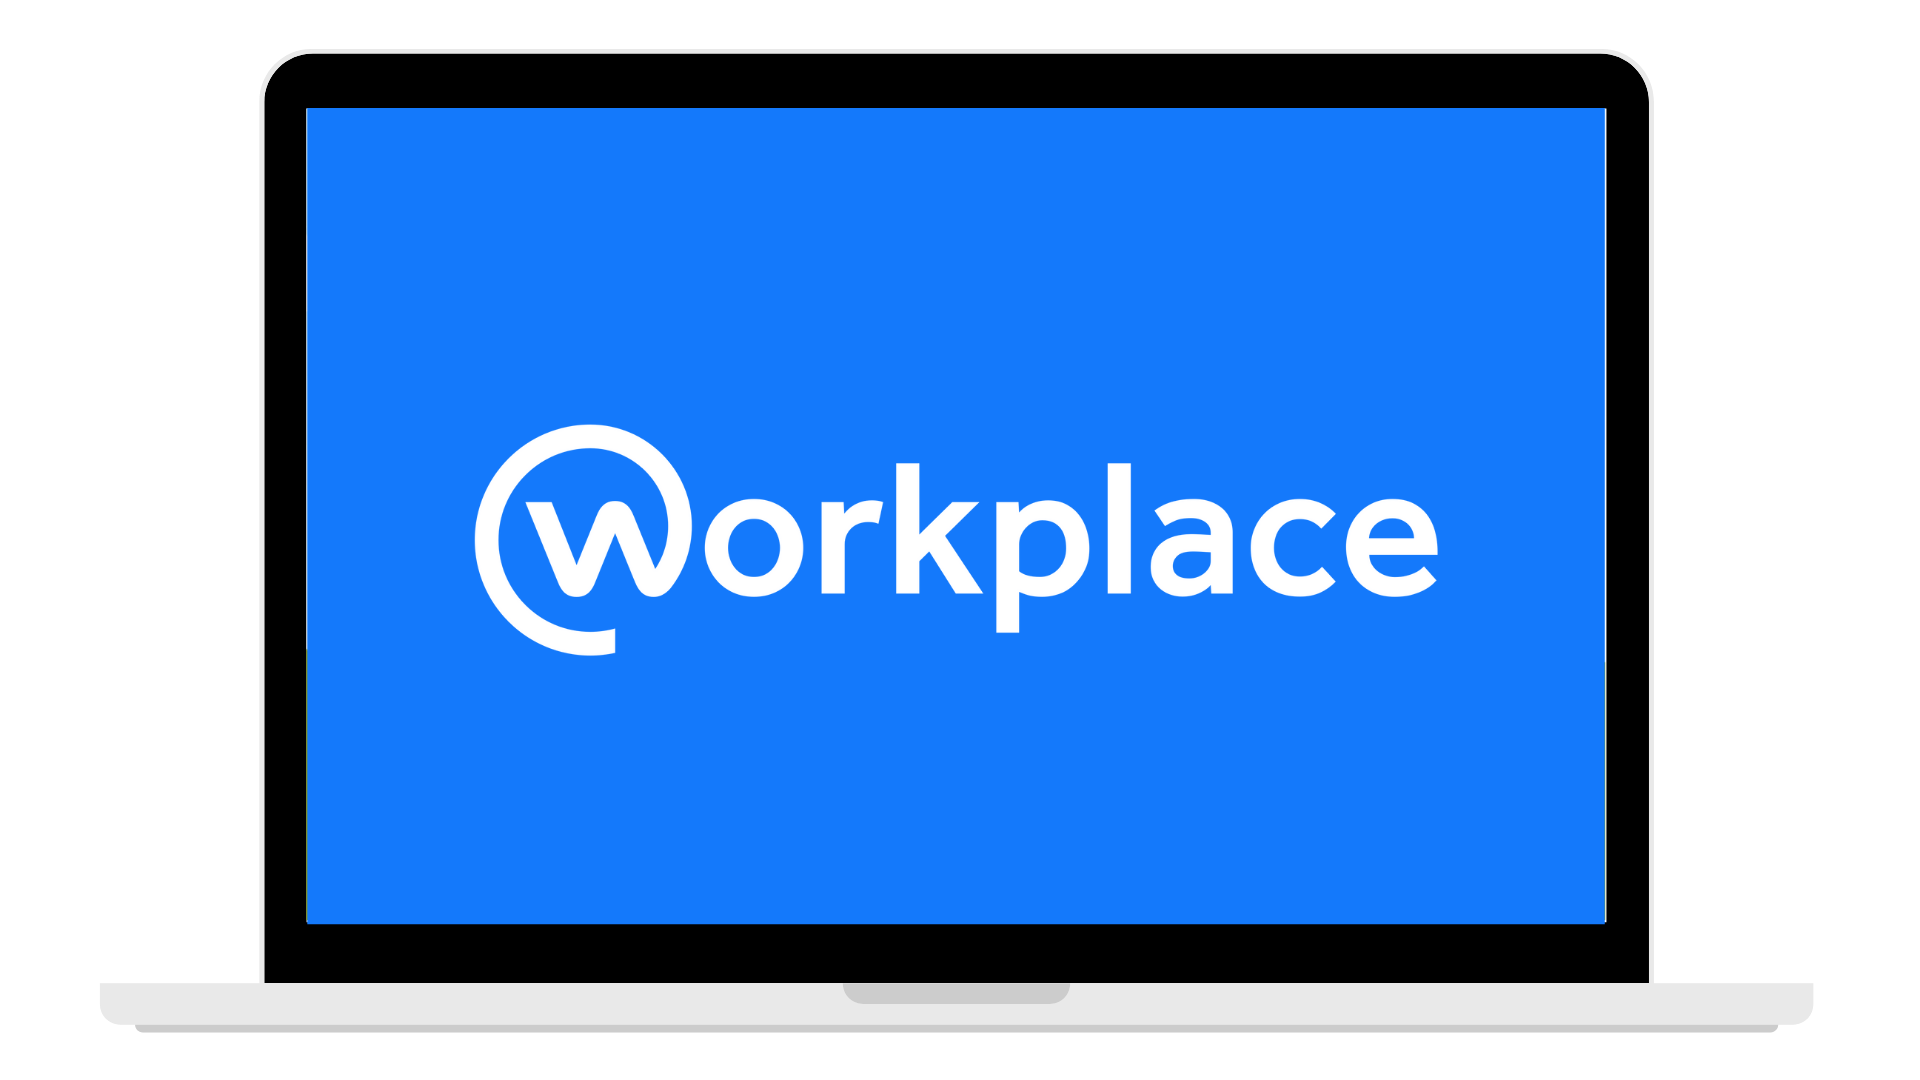 _generic workplace - Laptop